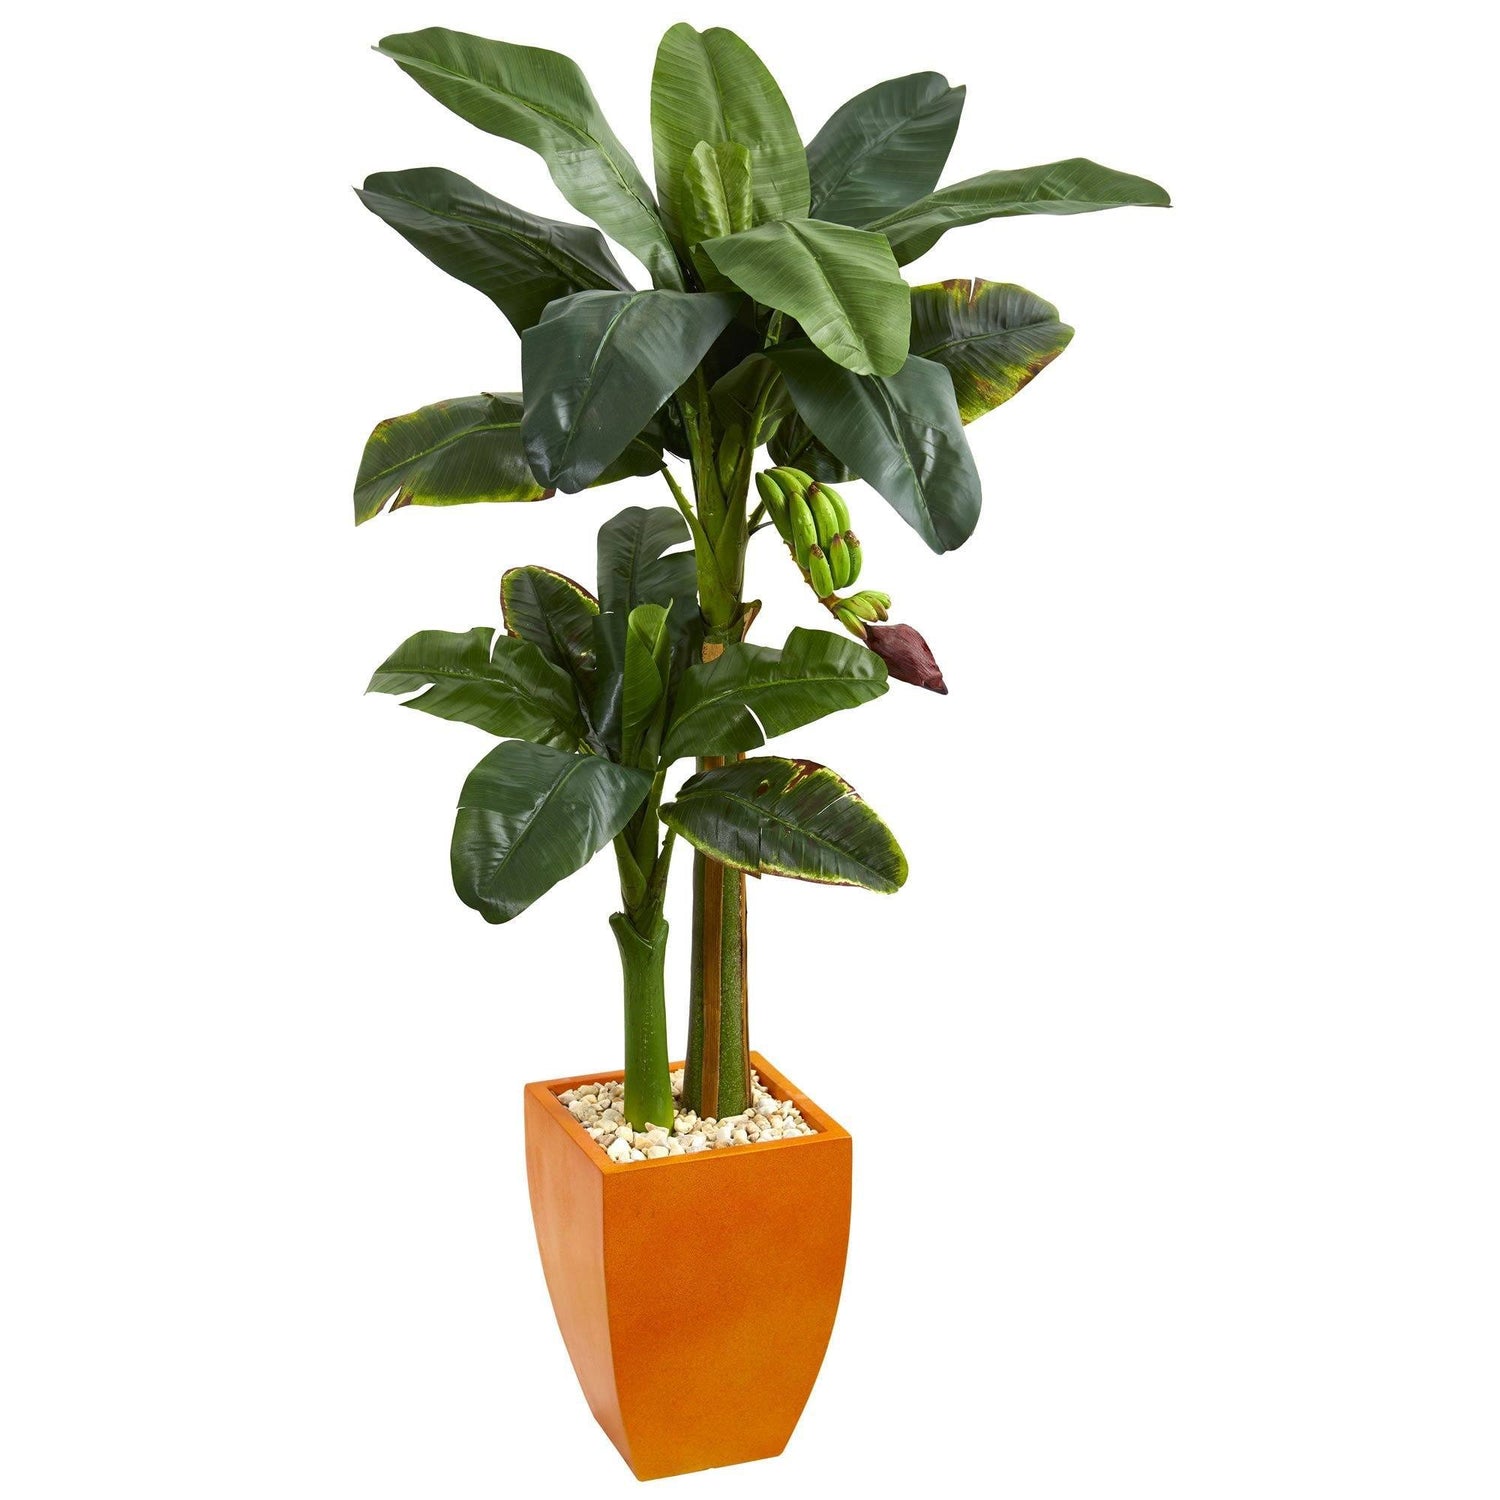 5.5’ Double Stalk Banana Artificial Tree in Orange Planter